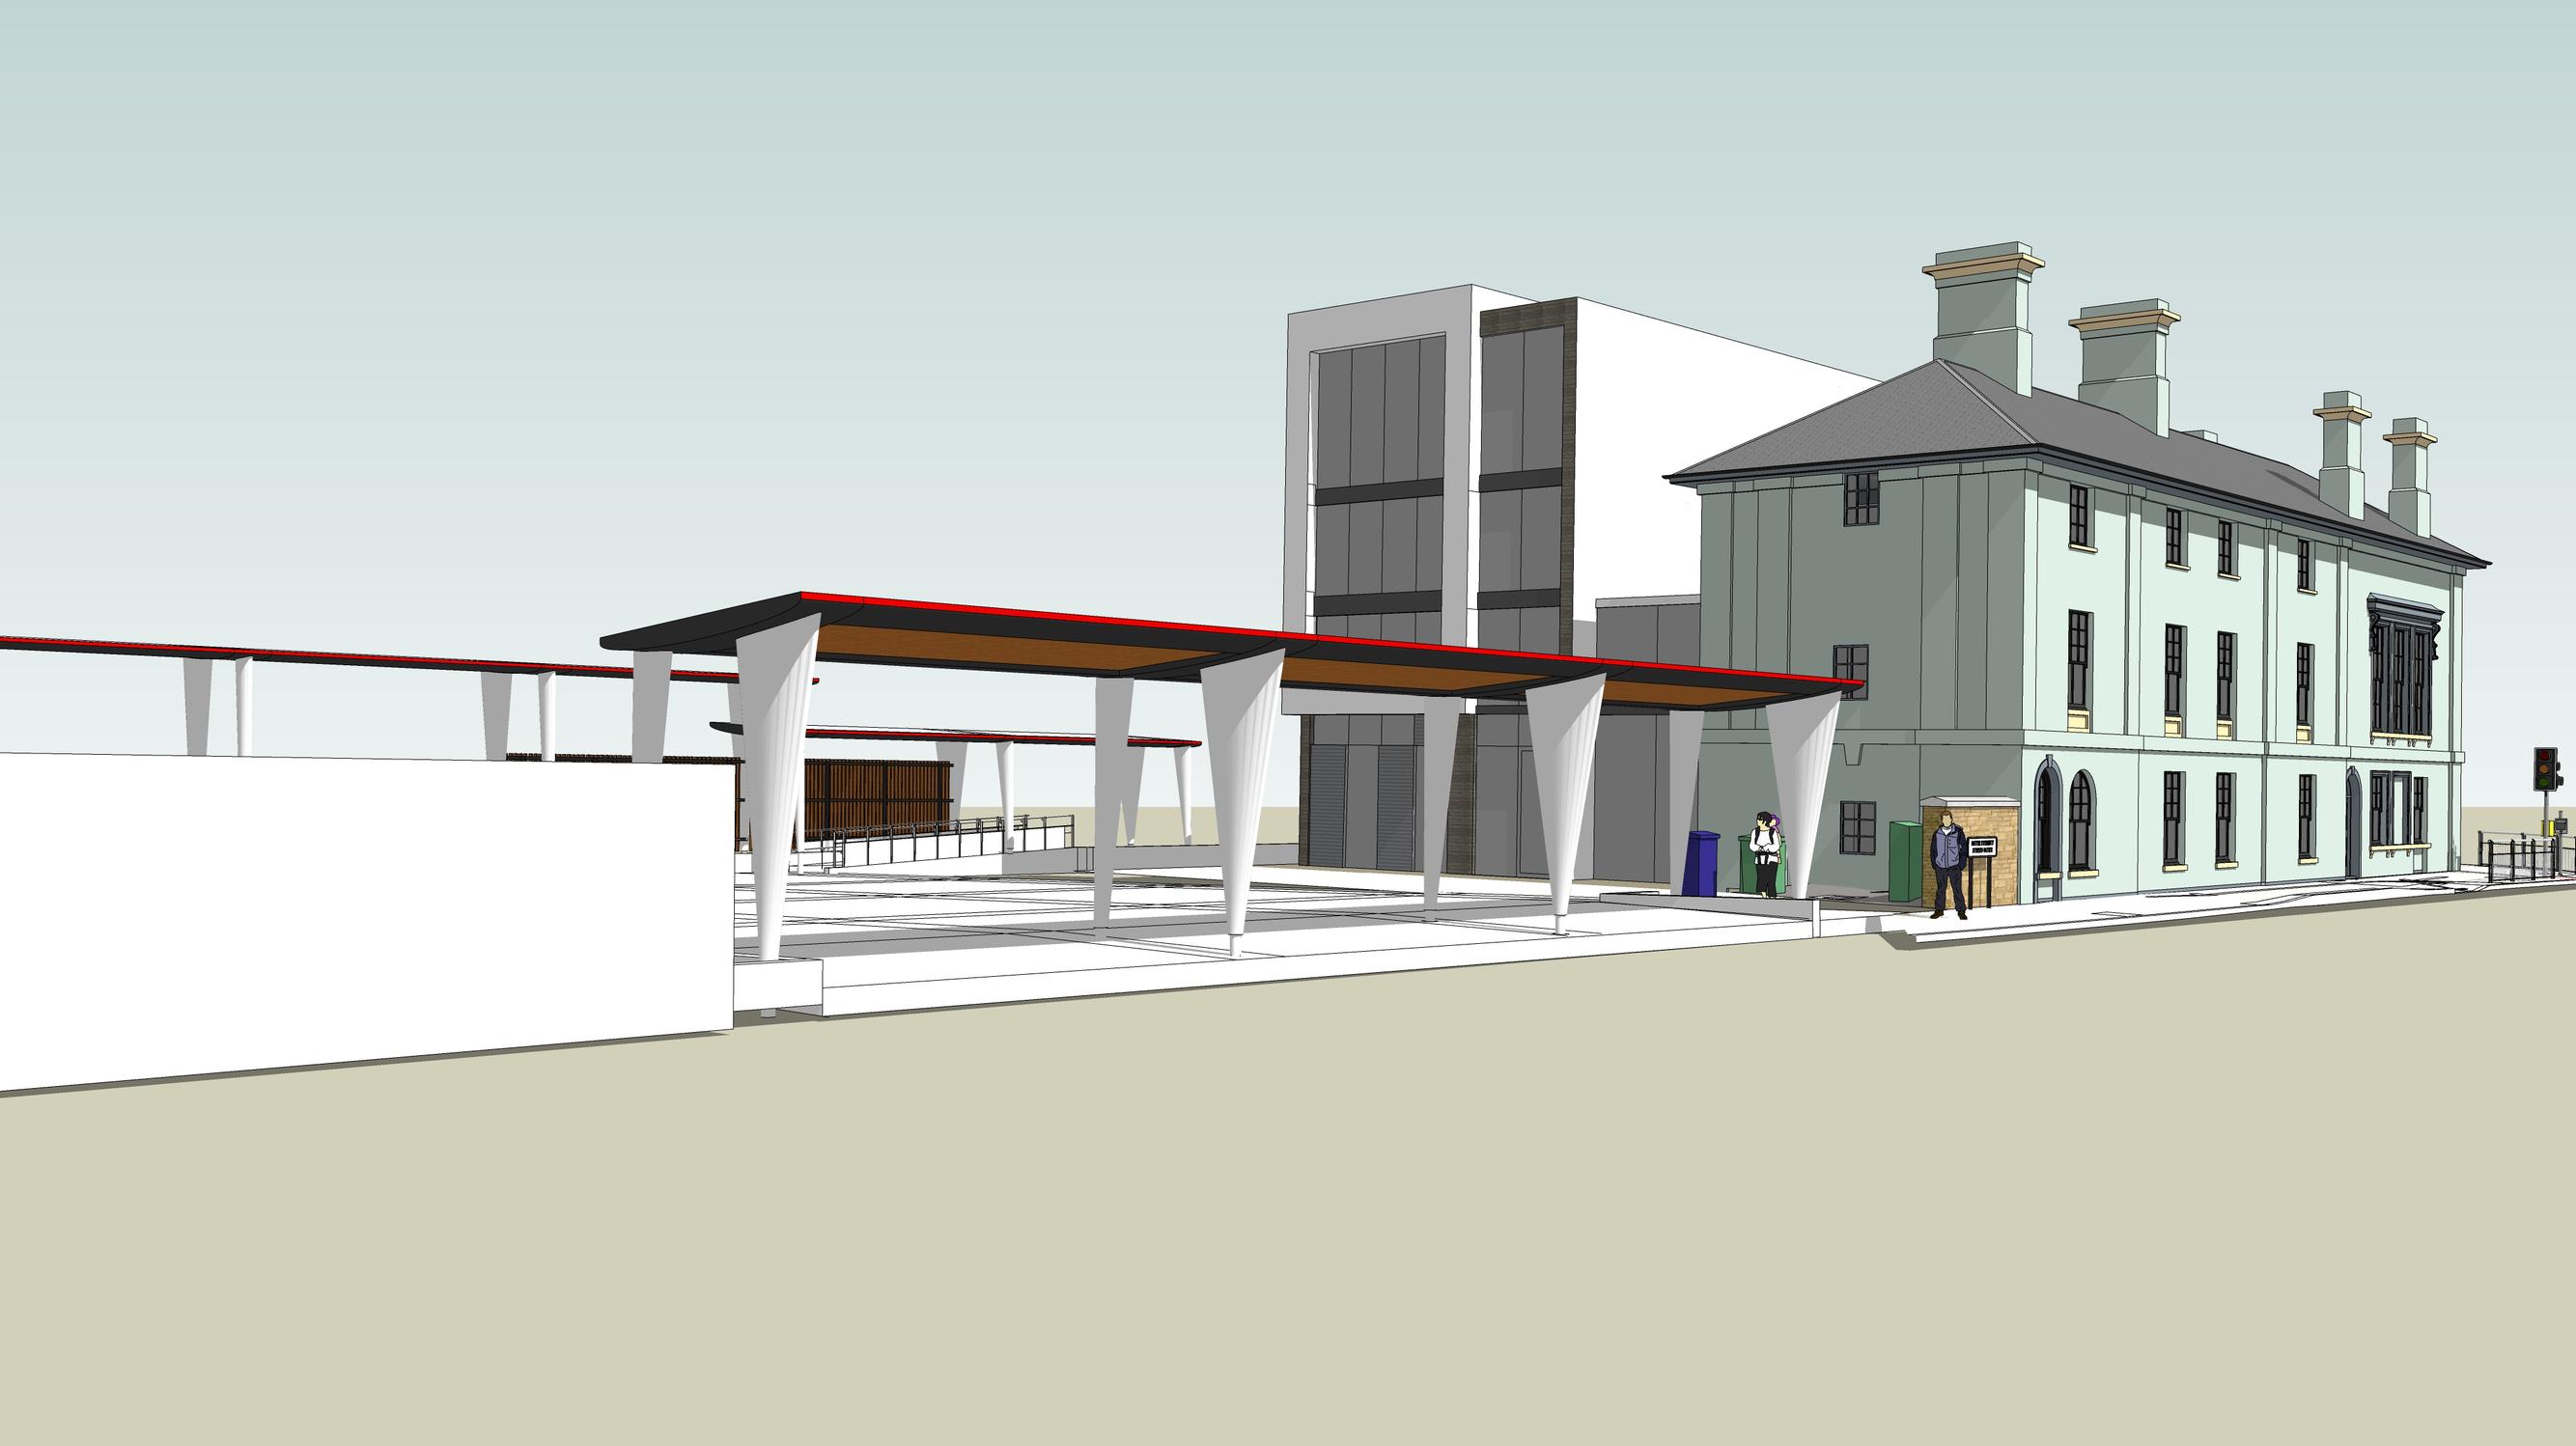 The new Butetown railway station design